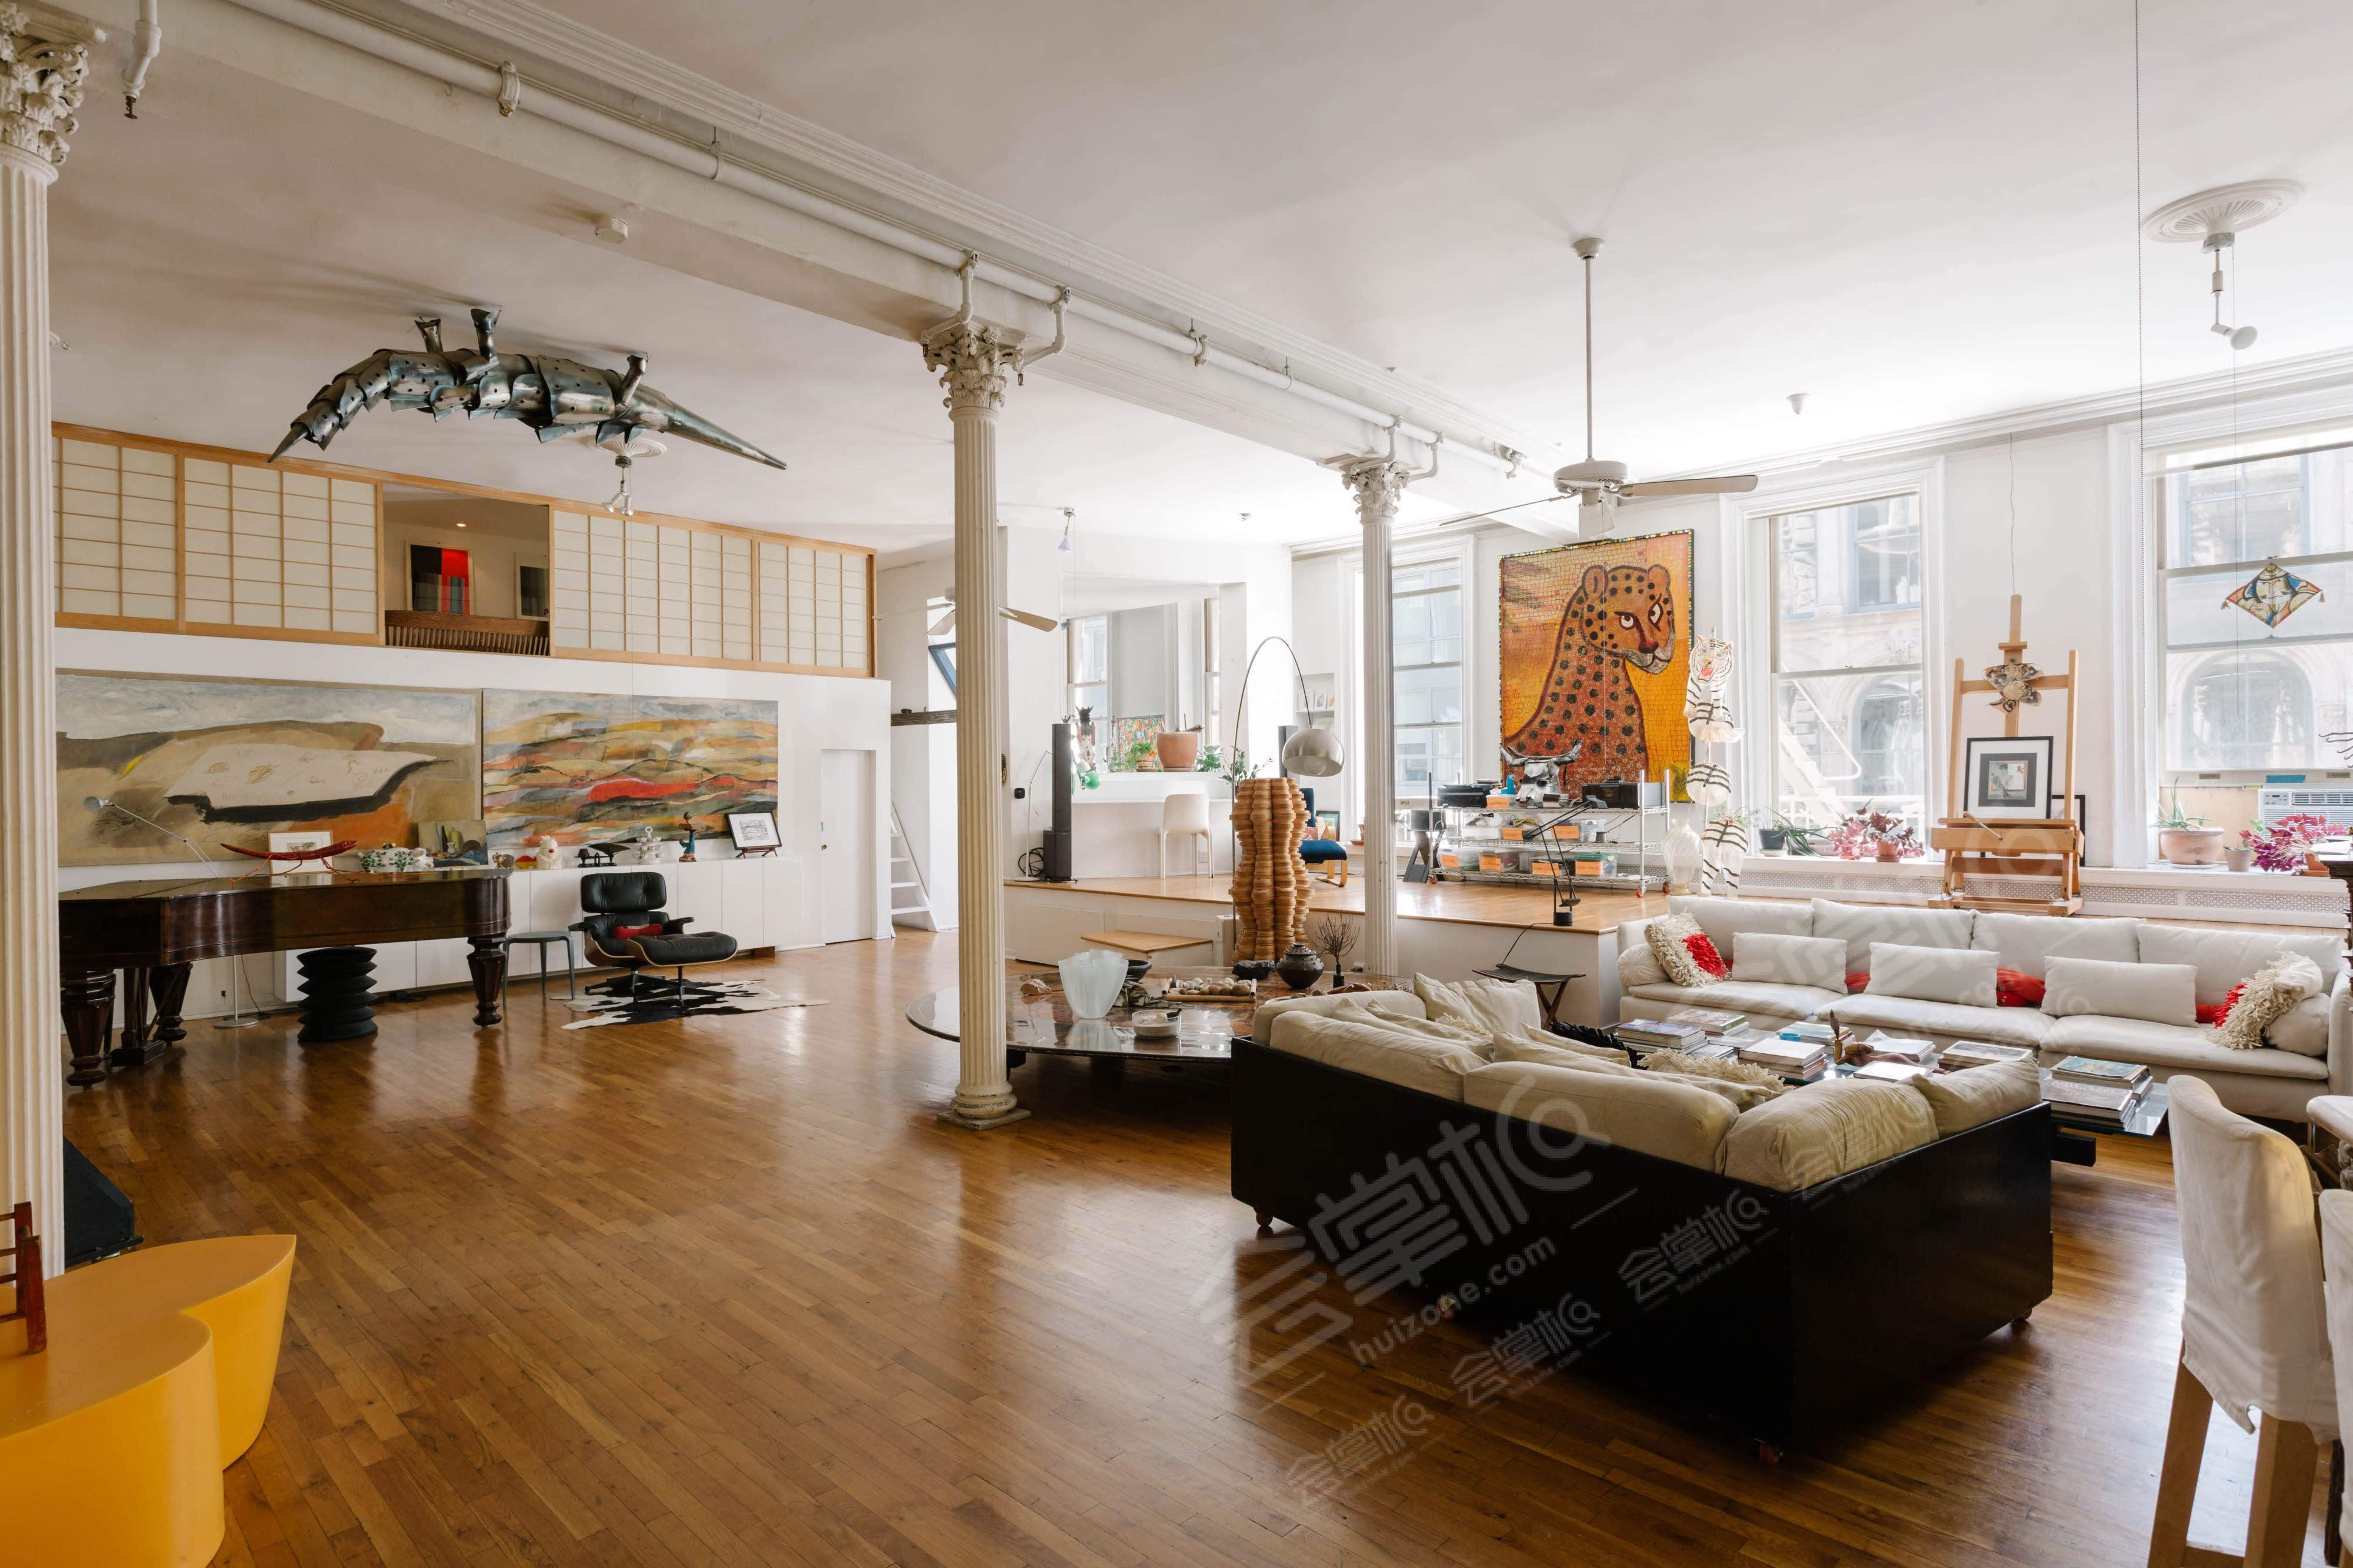 4,200 sq/ft lavish artist loft in Tribeca offering authentic creative magic of NYC